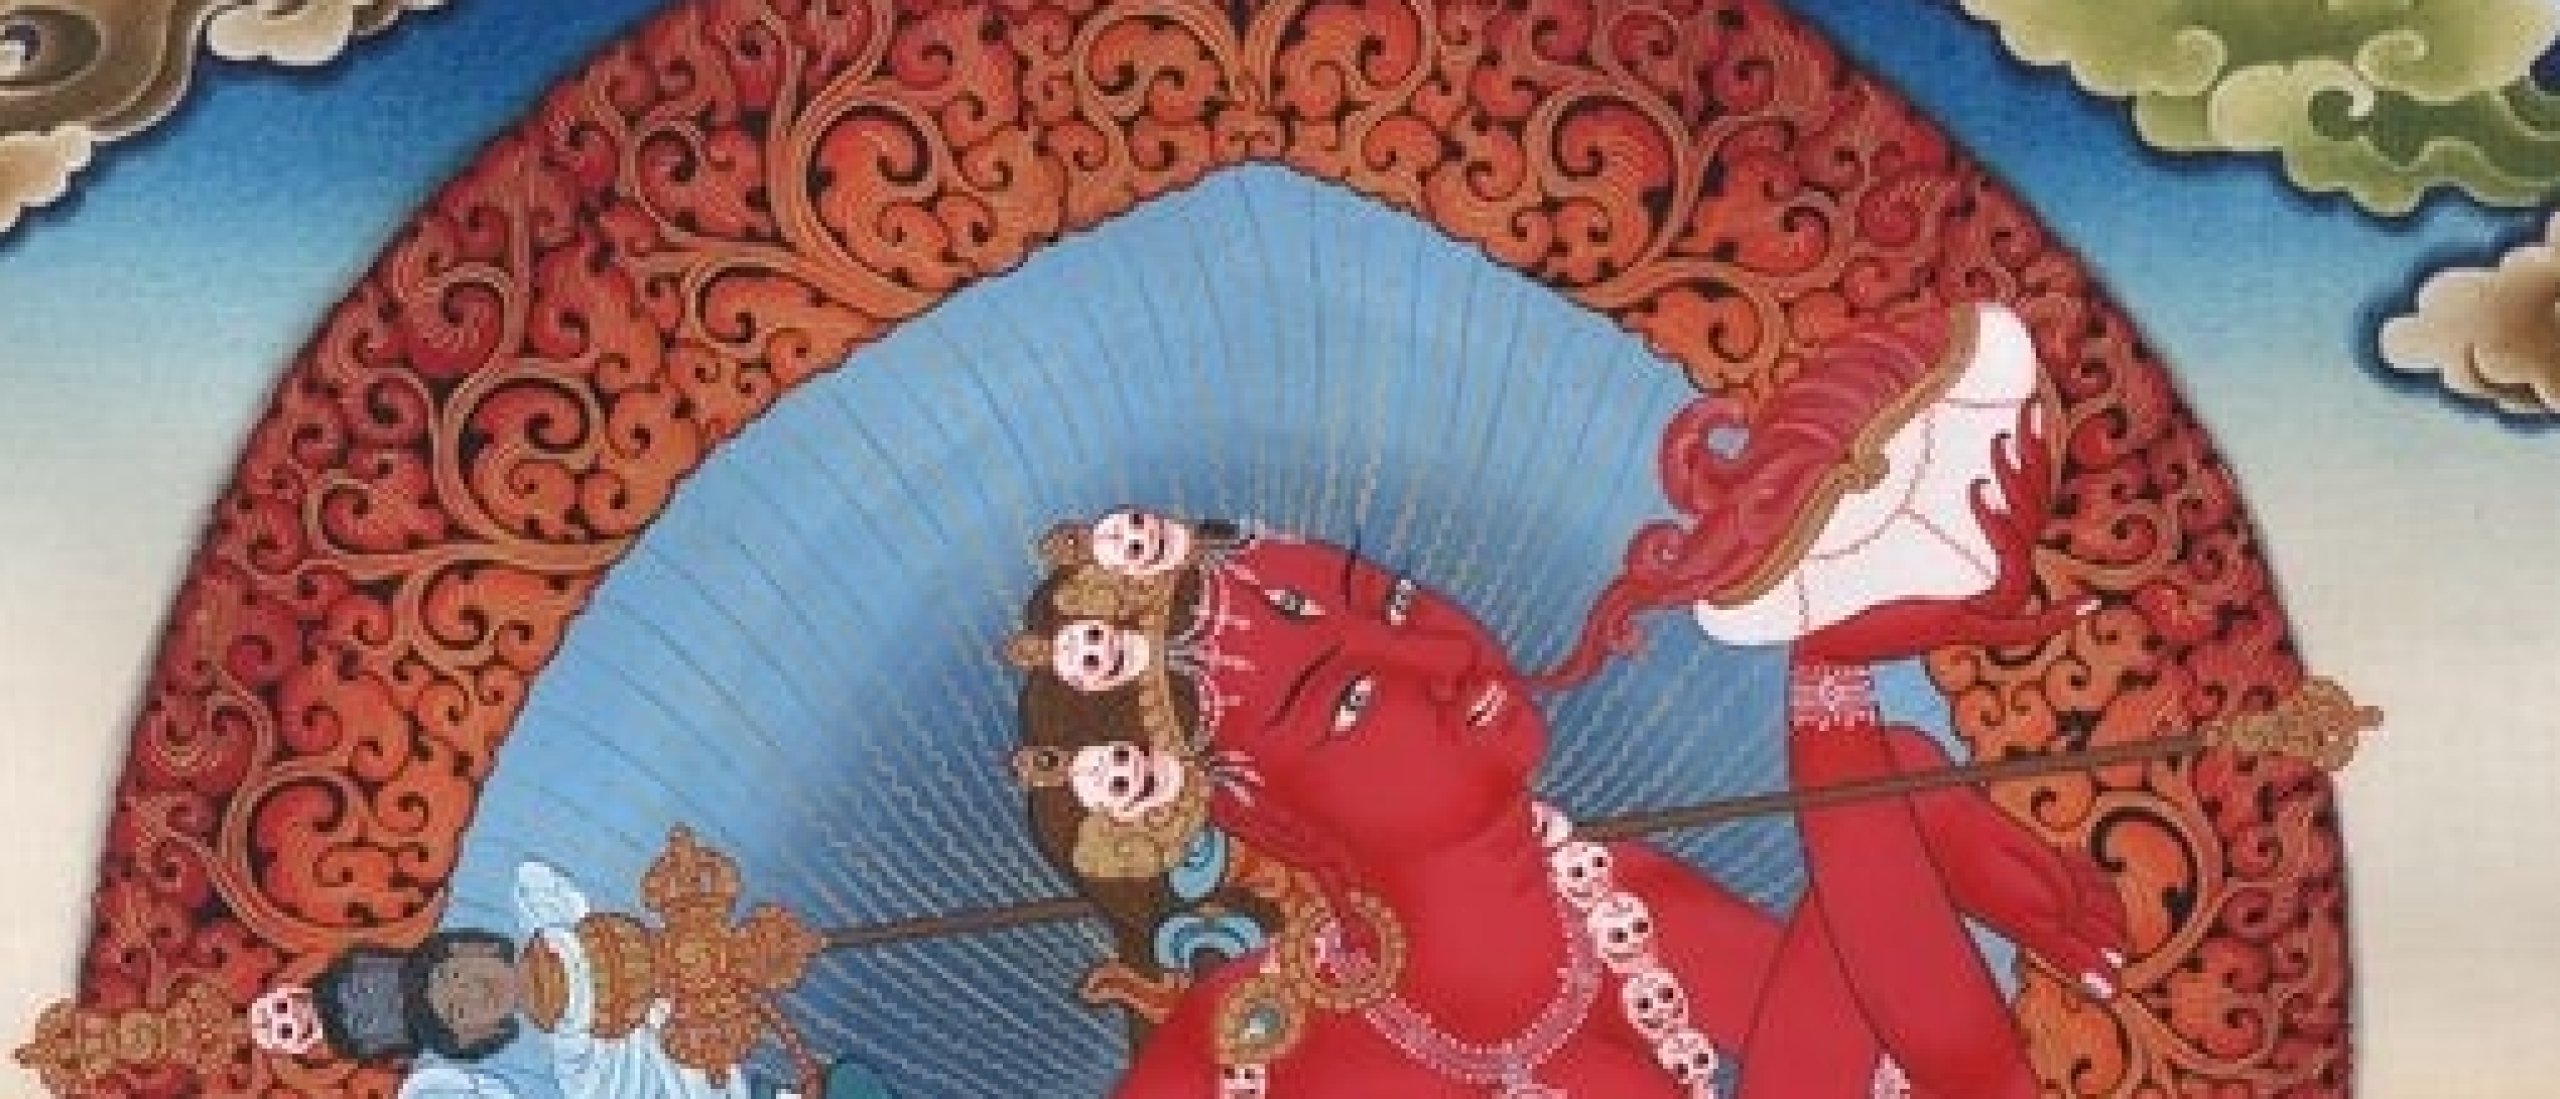 Vajrayogini’s Sexual imagery in Tantric Buddhist Art